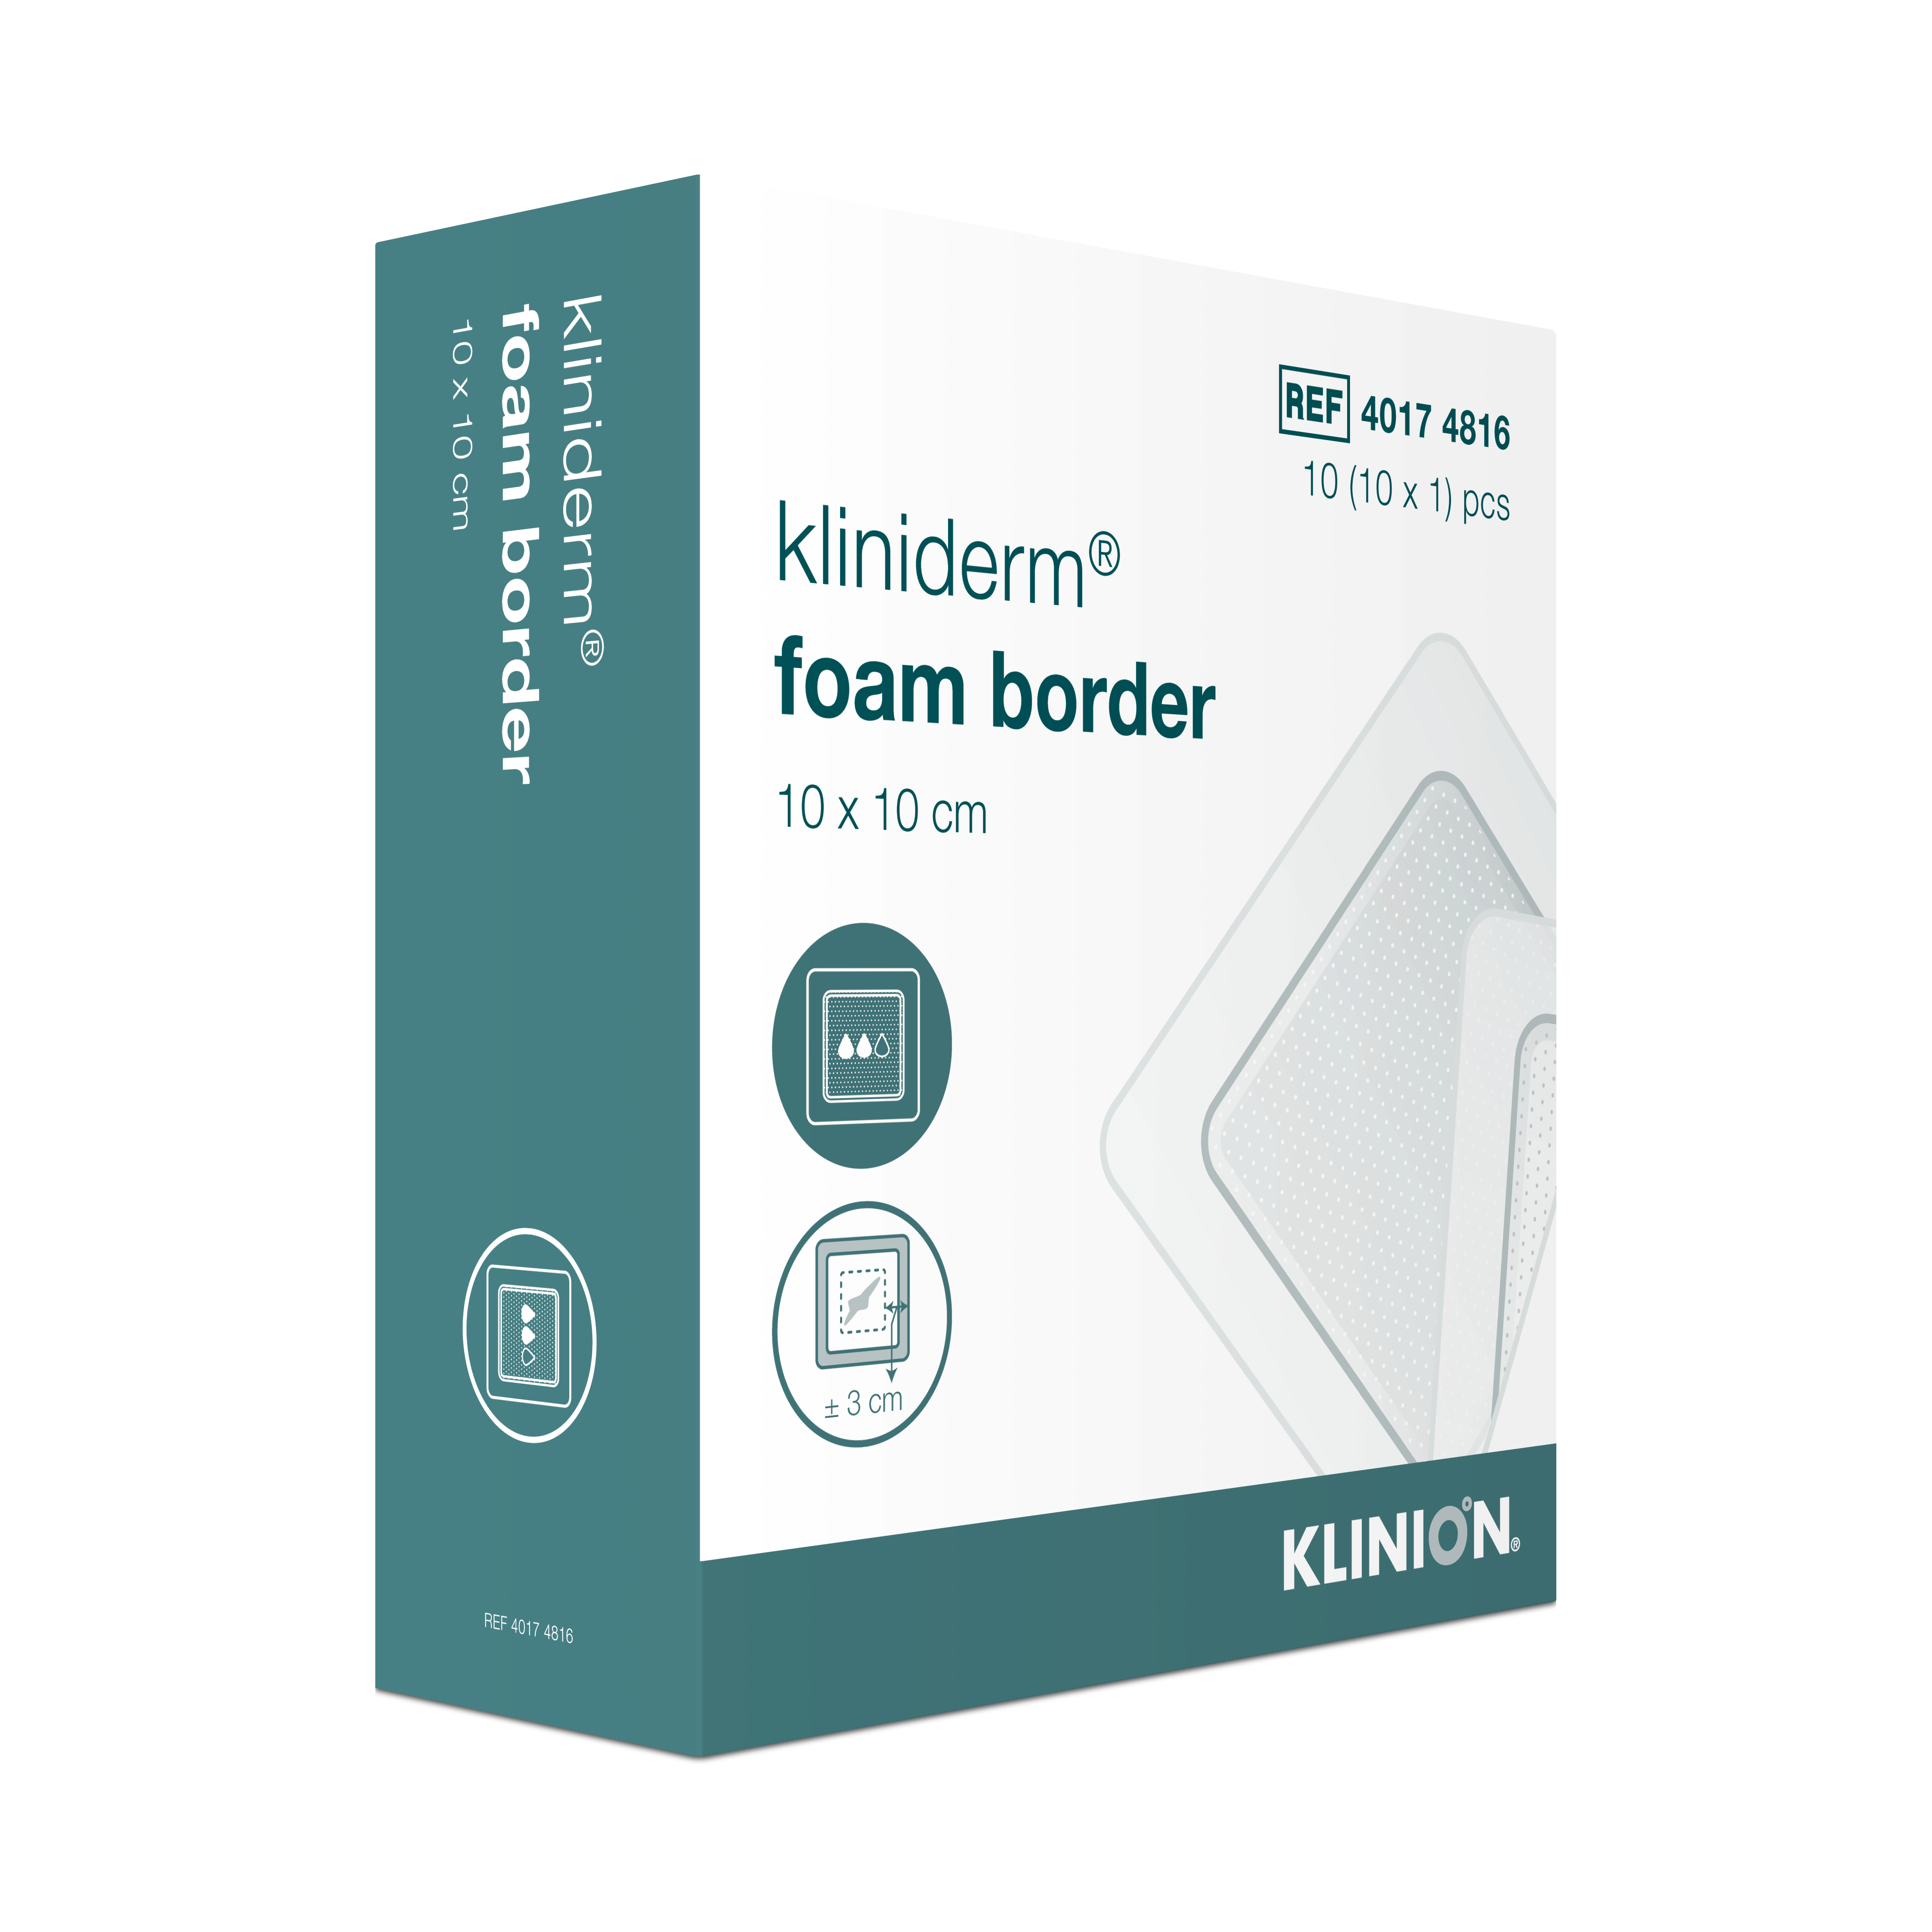 Kliniderm Foam Border